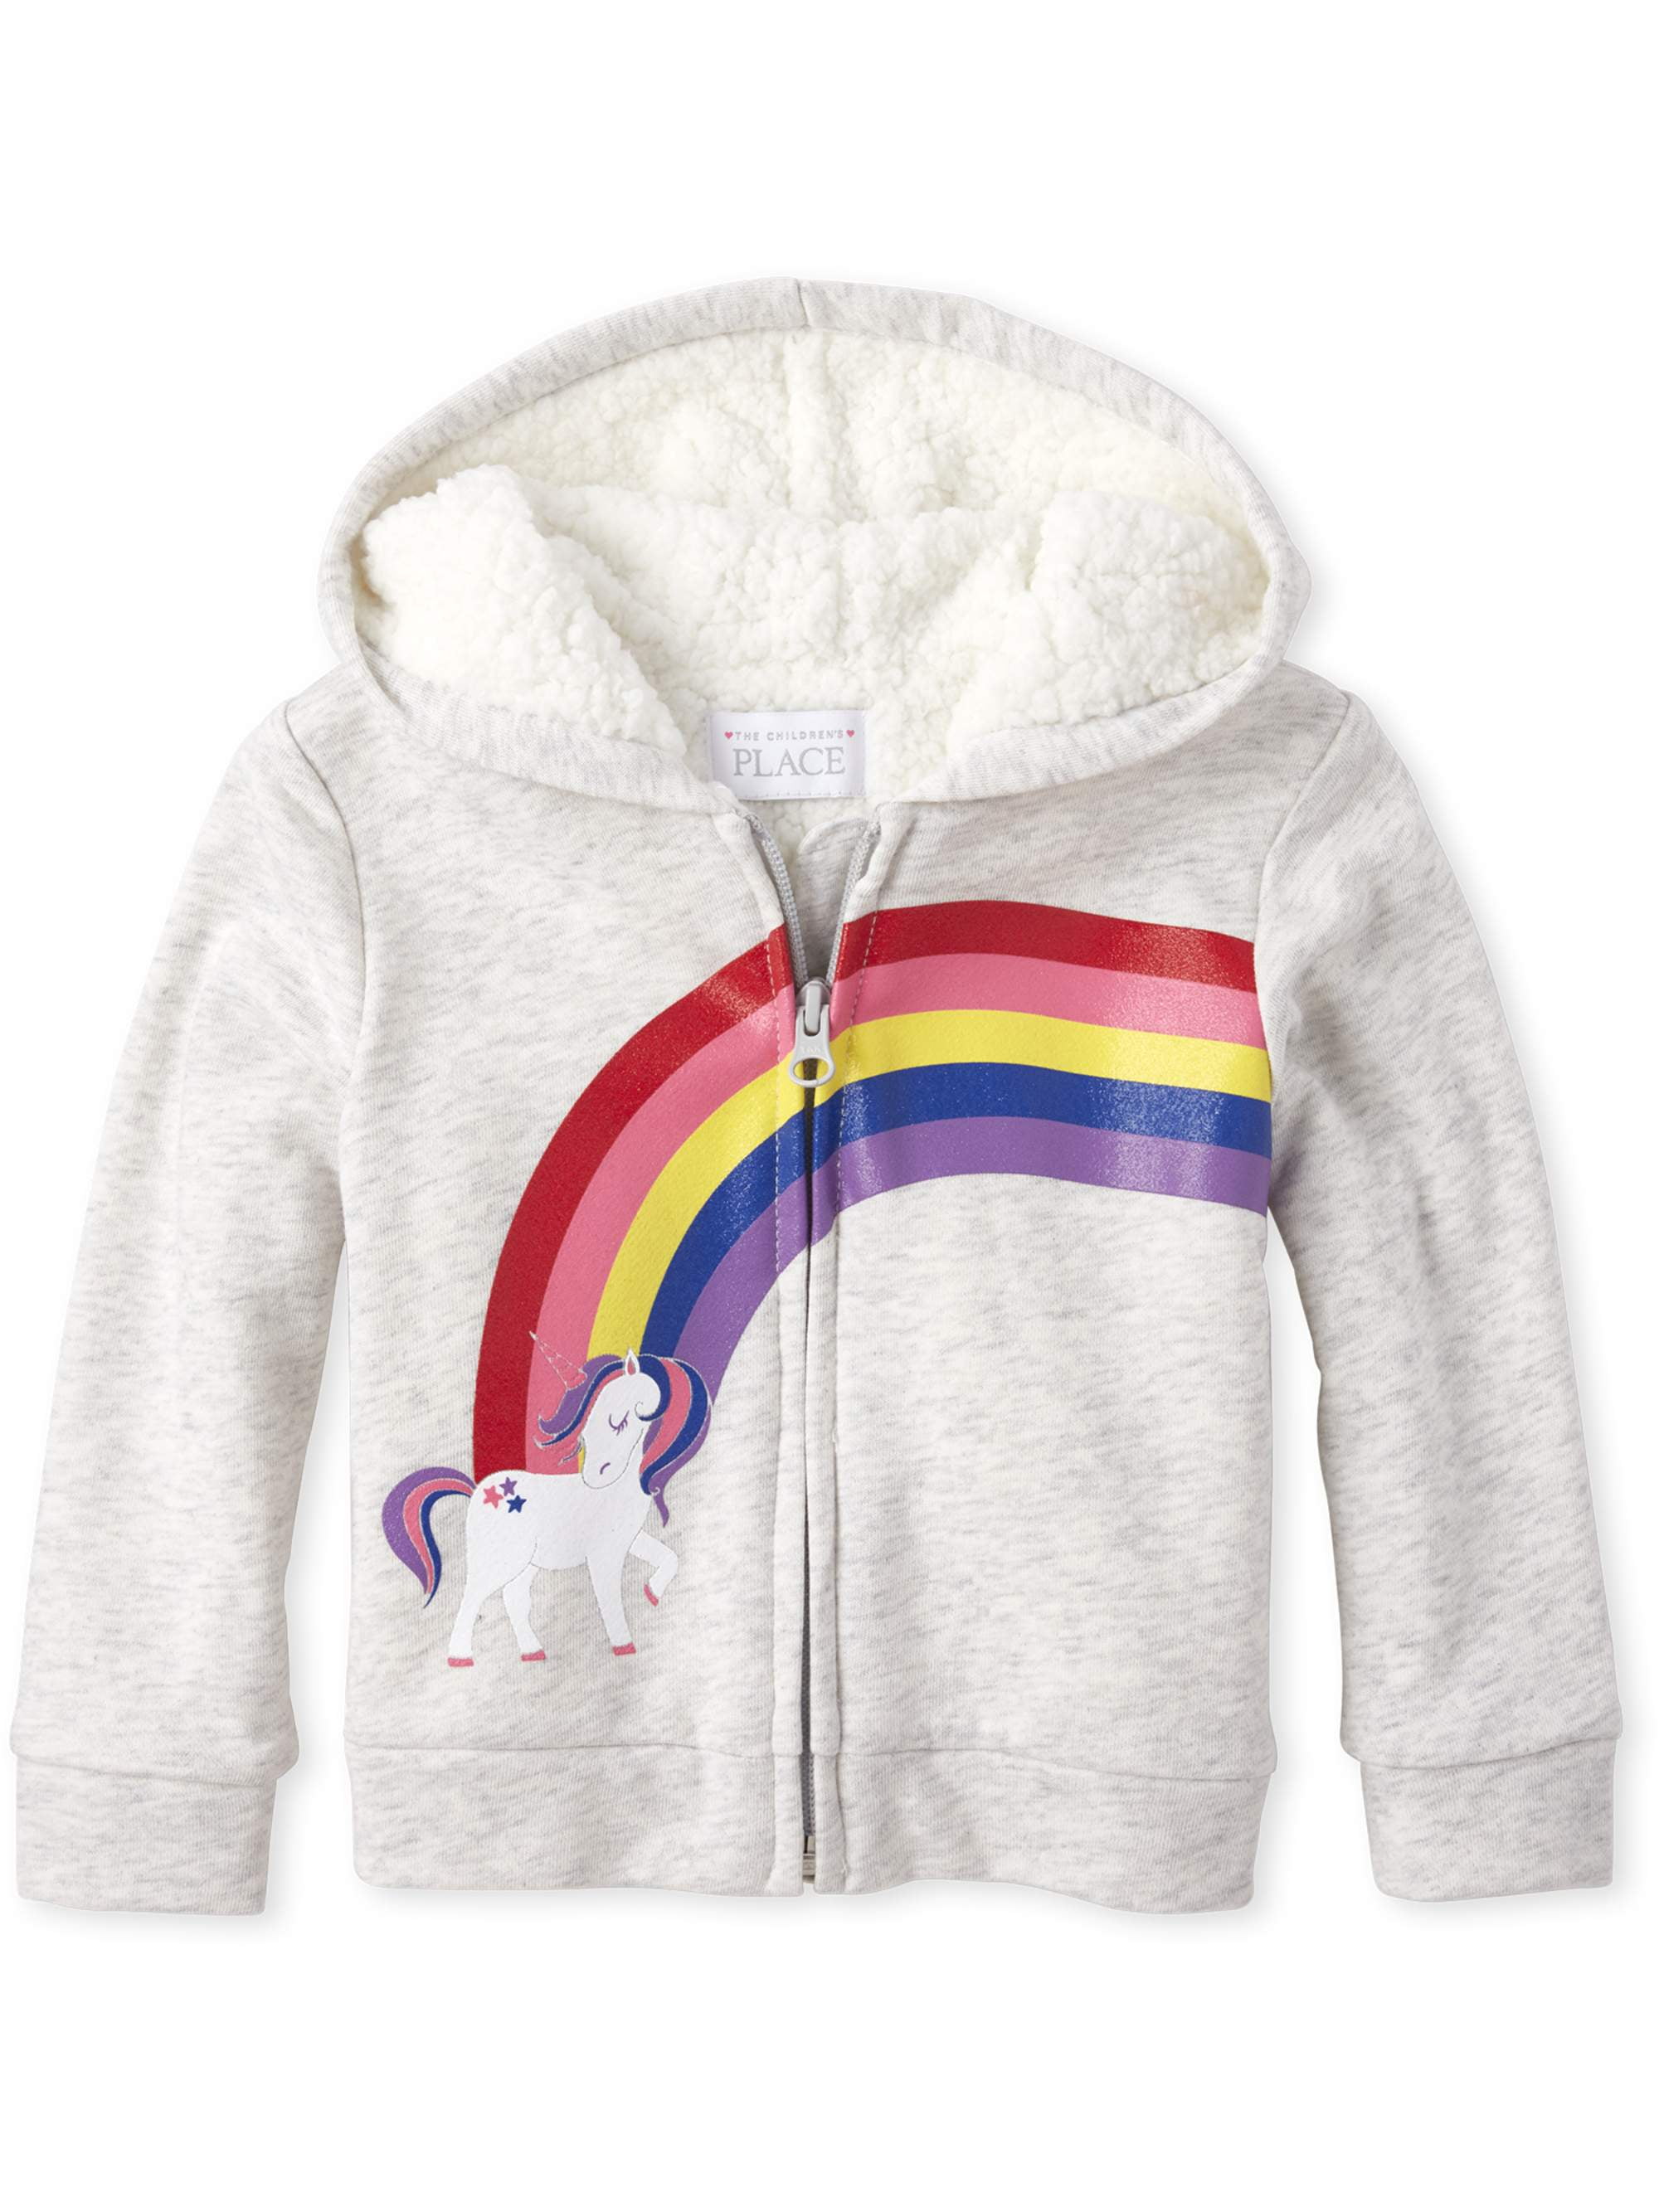 Unicorn Sweatshirts for Girls Toddler & Kids II Little Girl's Pullover Tops Sweaters & Hoodies